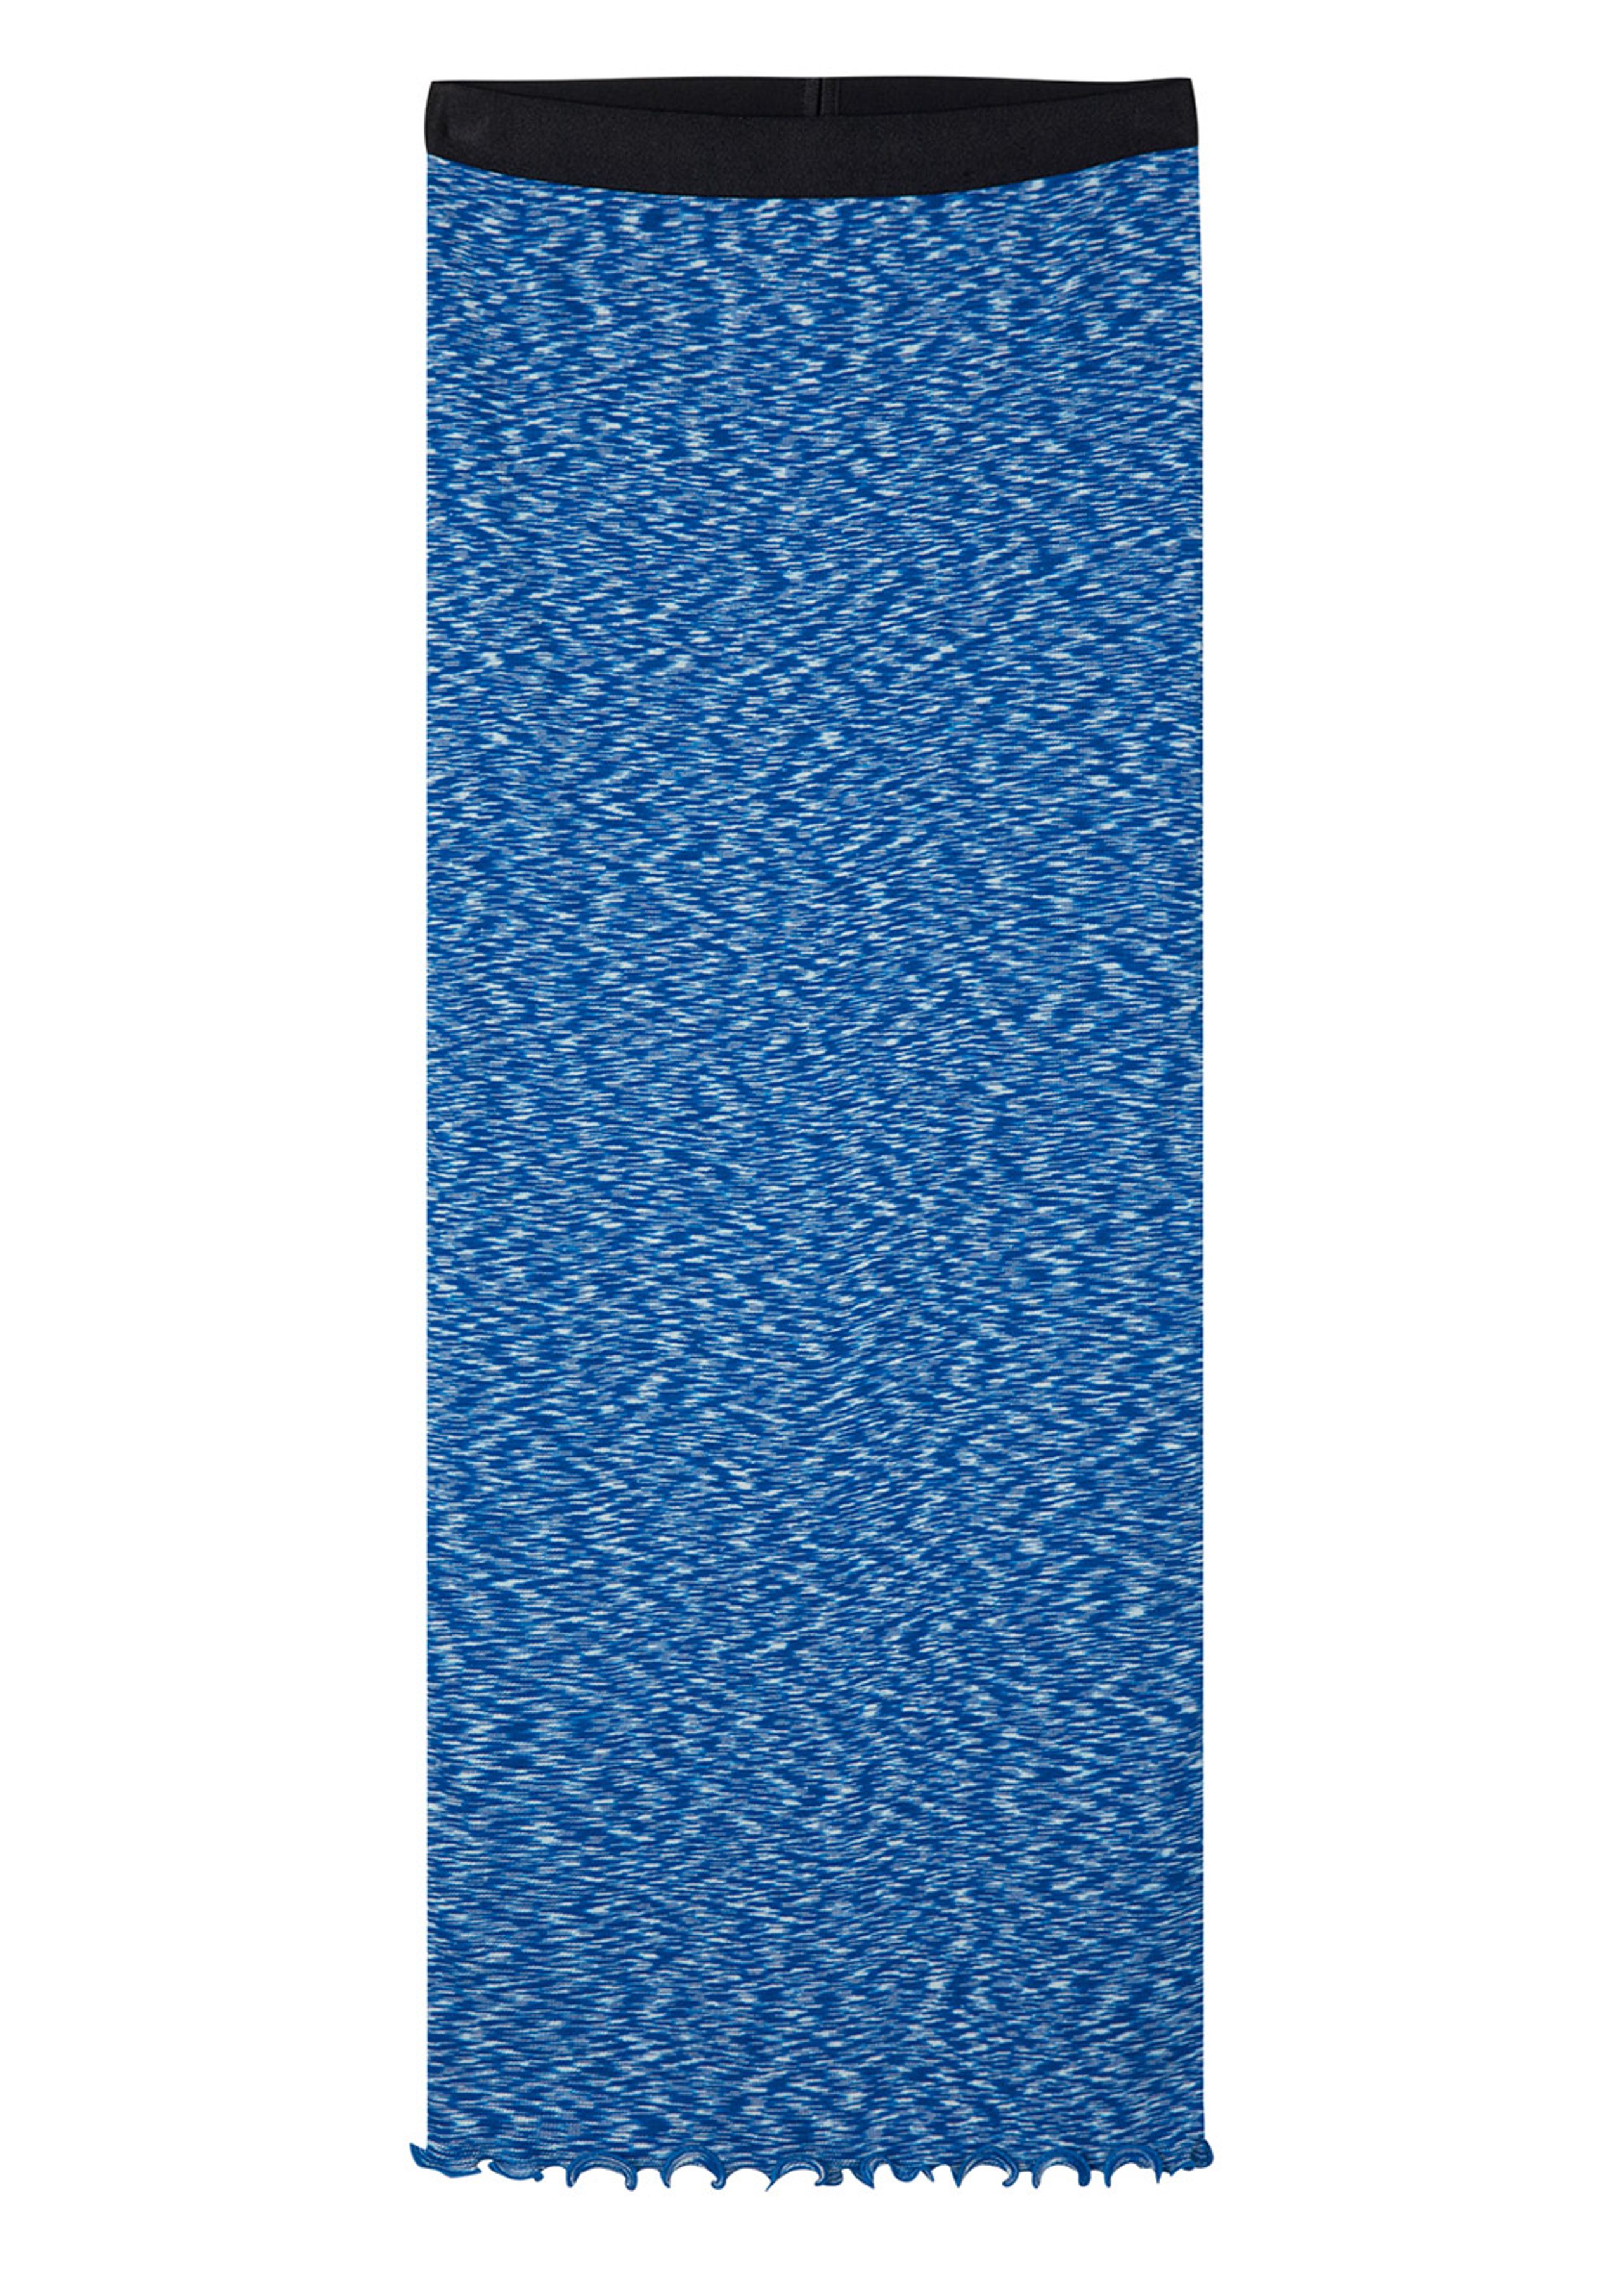 Mads Nørgaard - Rok - 2x2 Cotton Space Maxine Skirt - Multi Blue